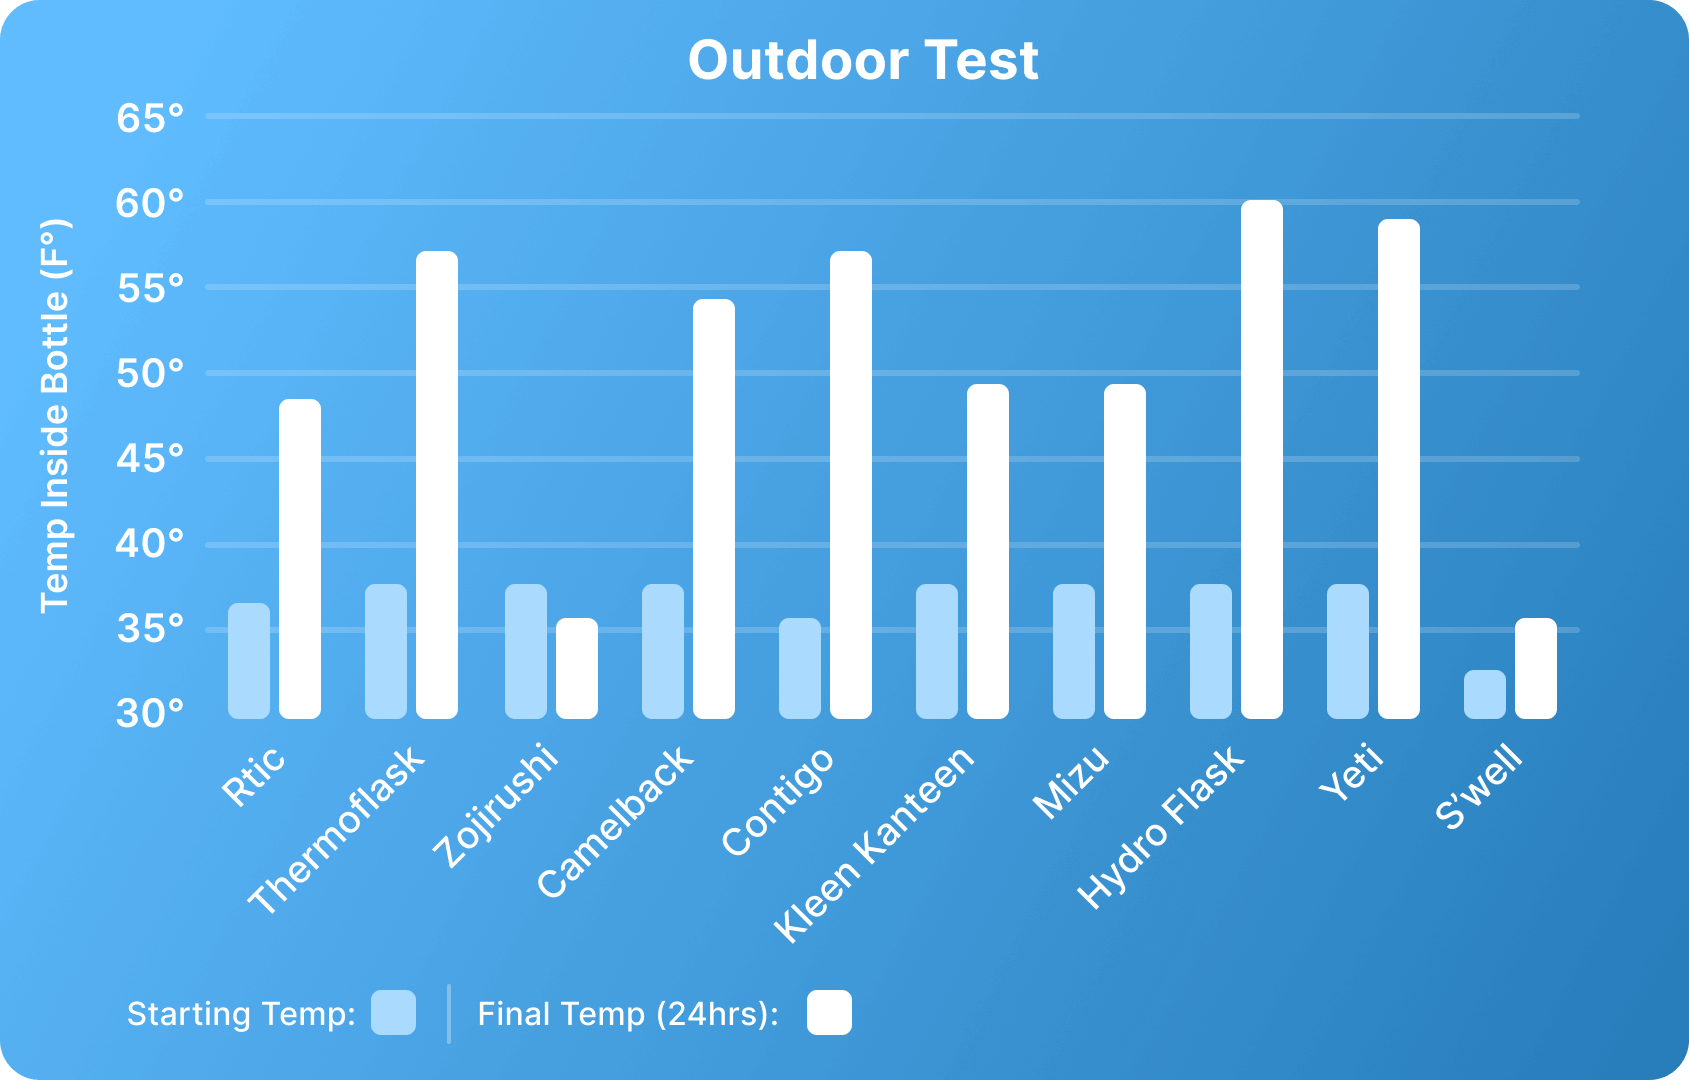 https://daily.slickdeals.net/wp-content/uploads/2018/08/outdoor-test-2.png